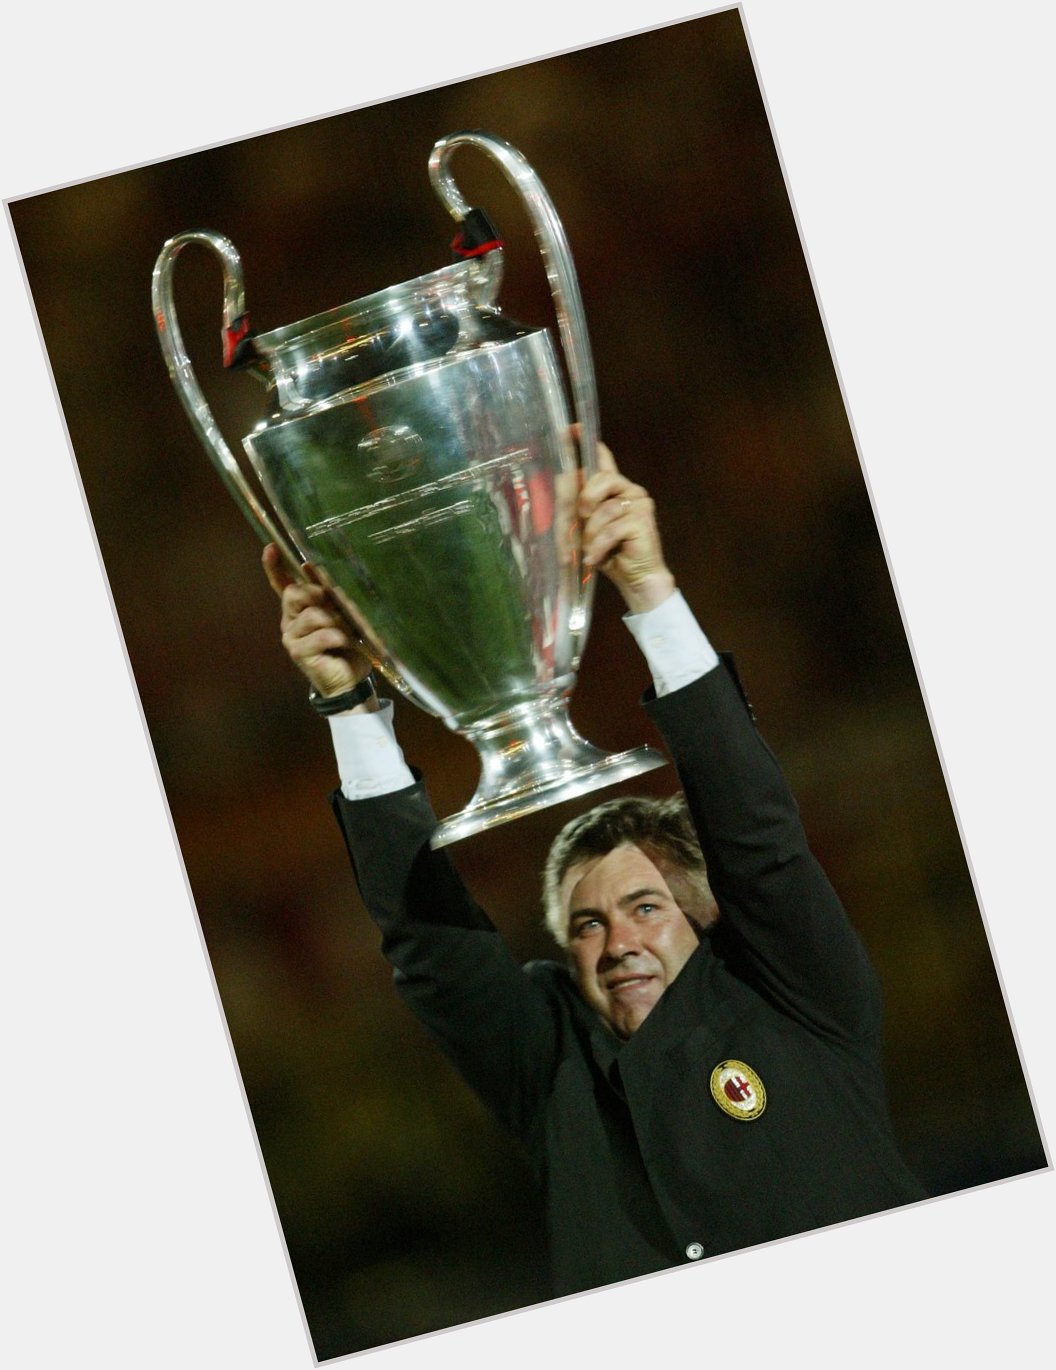 Happy Birthday to serial winner Carlo Ancelotti!

The boss is 62 today 